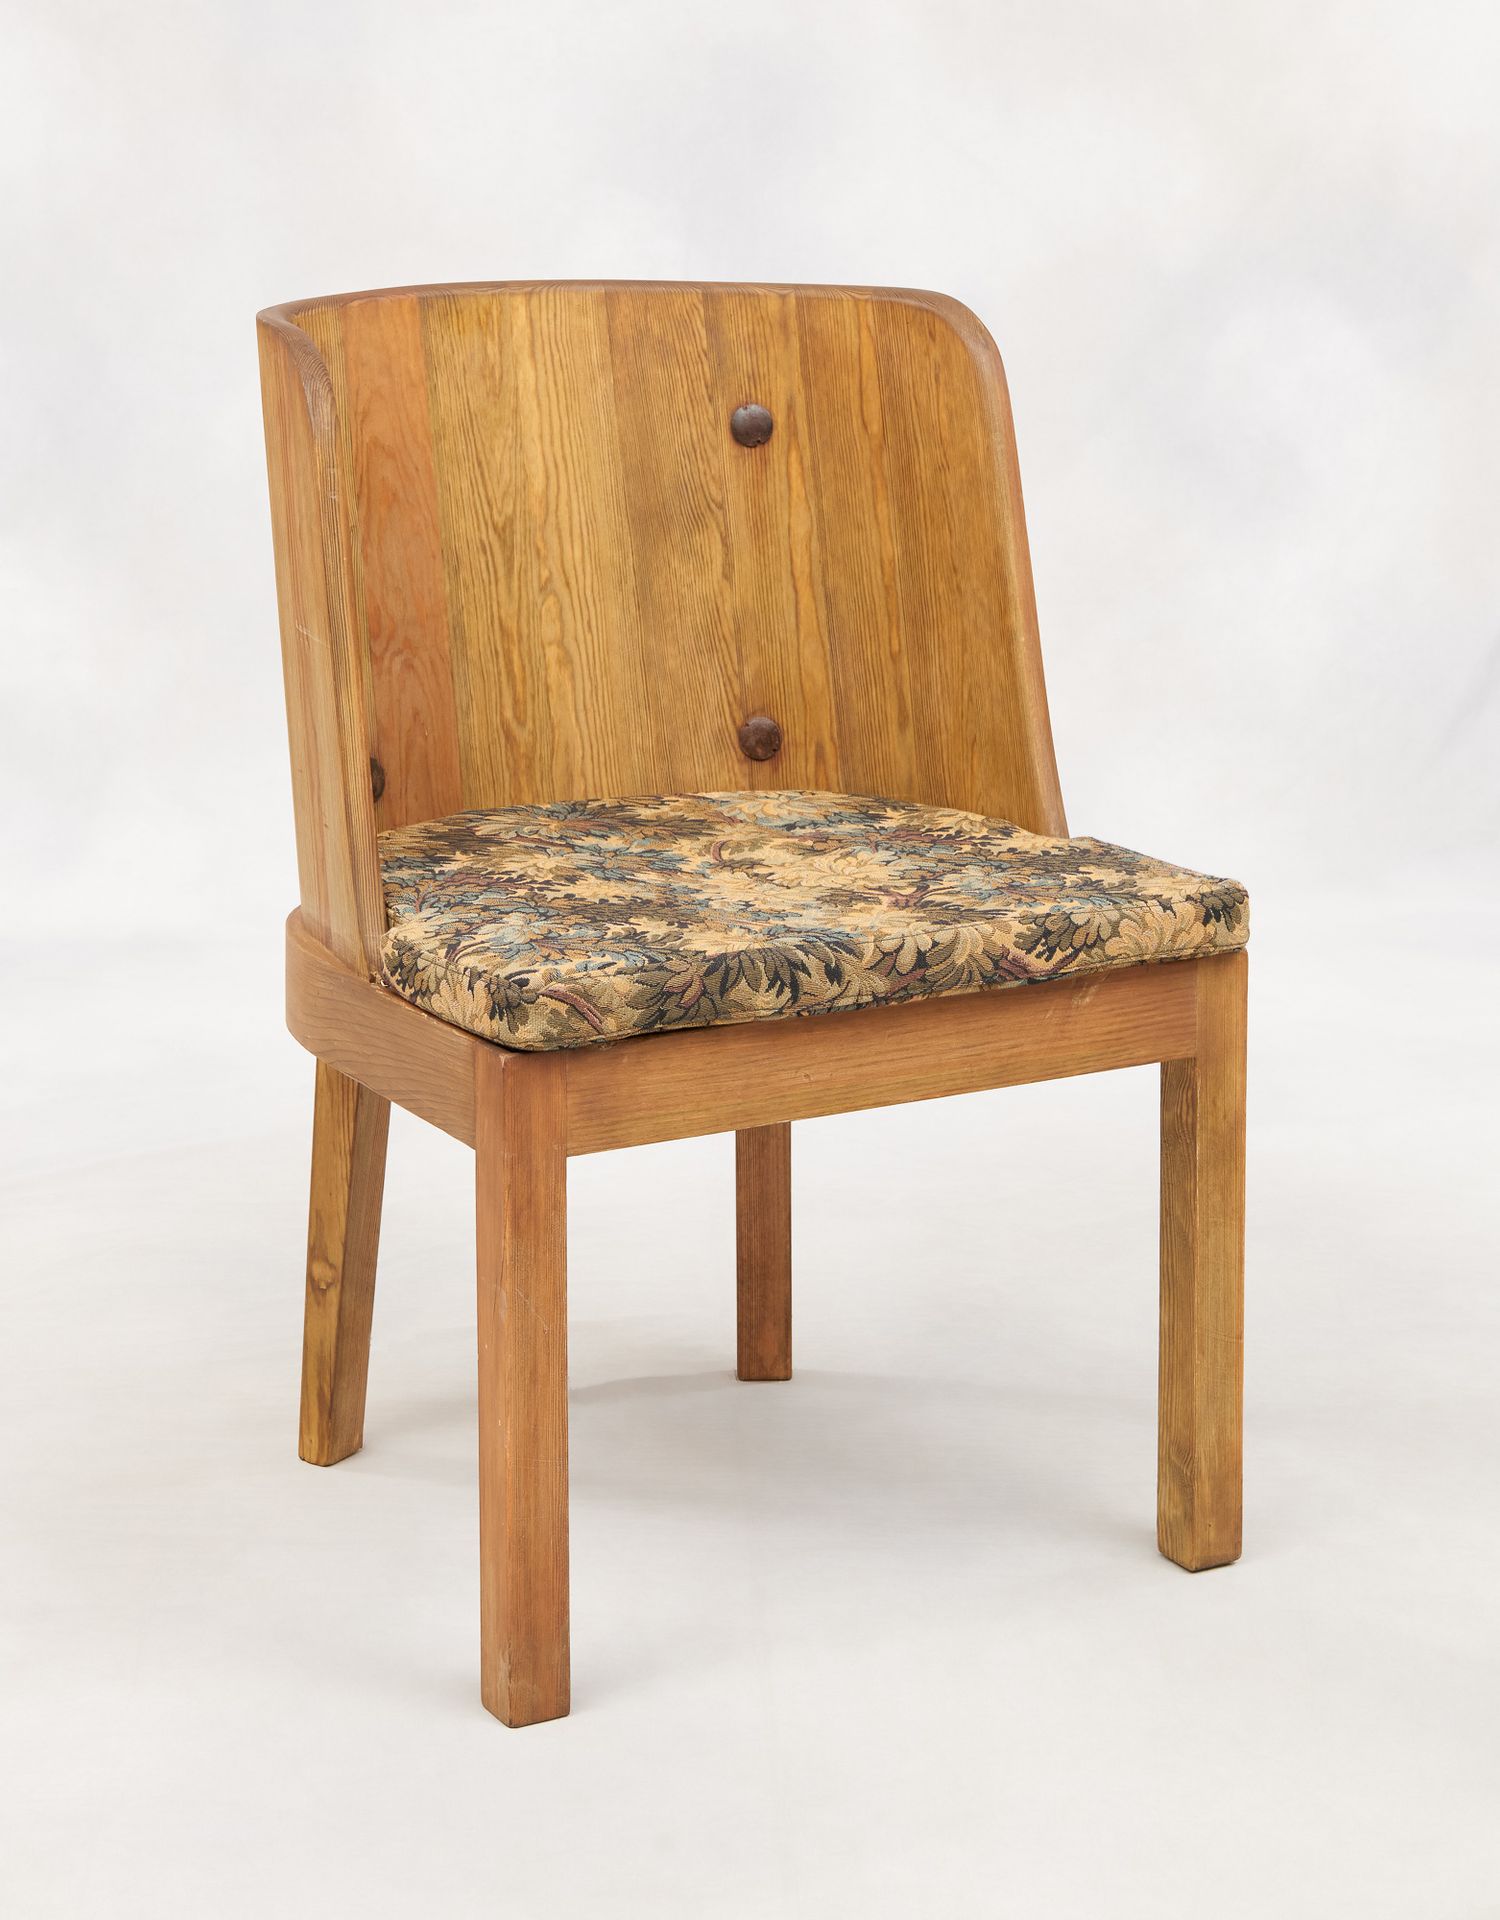 Design. Muebles: Pareja de sillones de pino macizo con cojines desenfundables.

&hellip;